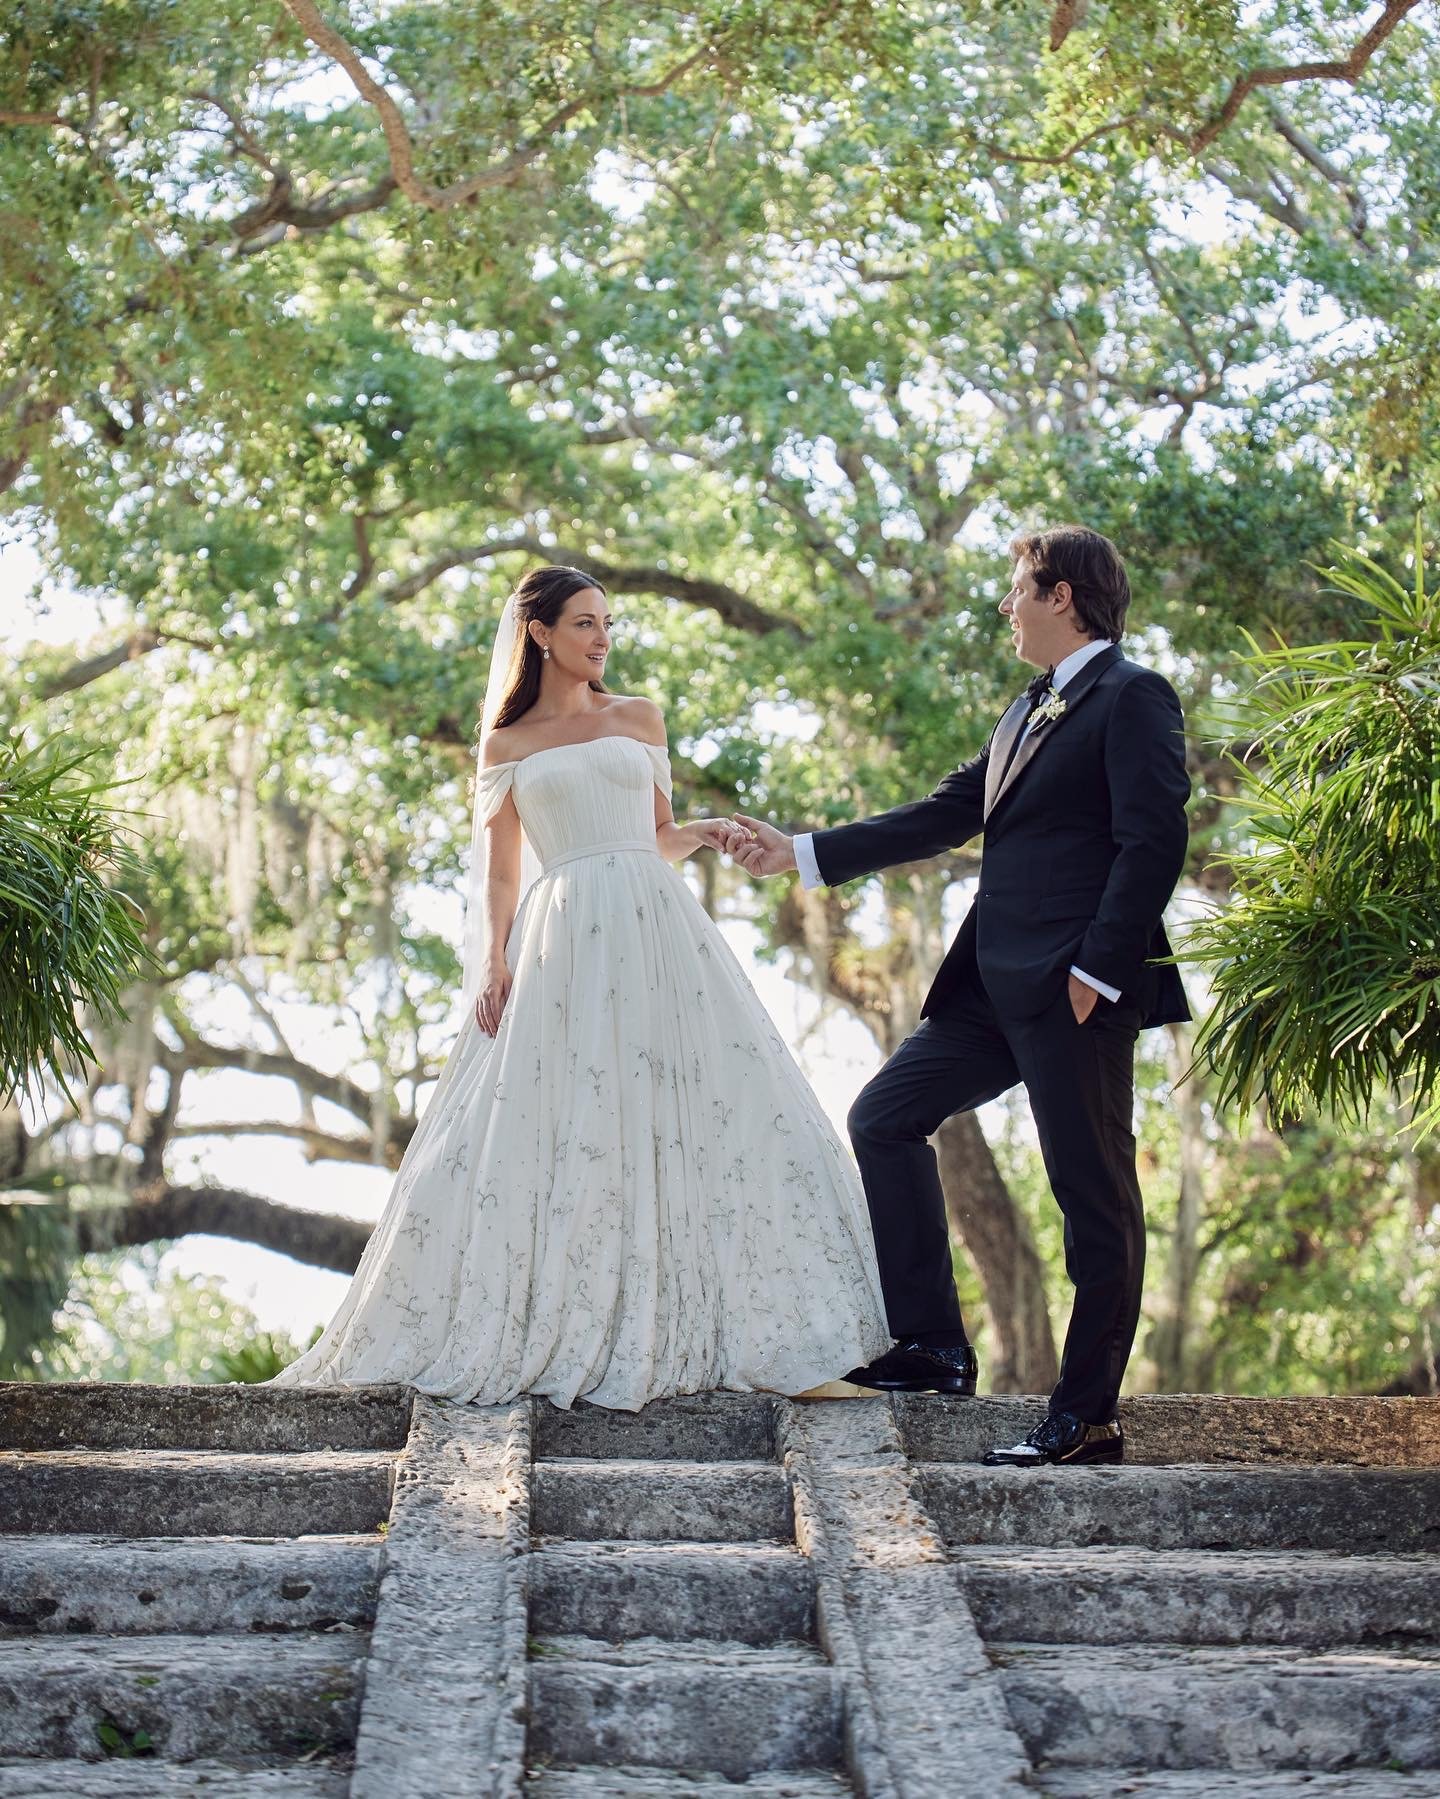 Micaela Erlanger Wedding at Viscaya Gardens Miami, FL